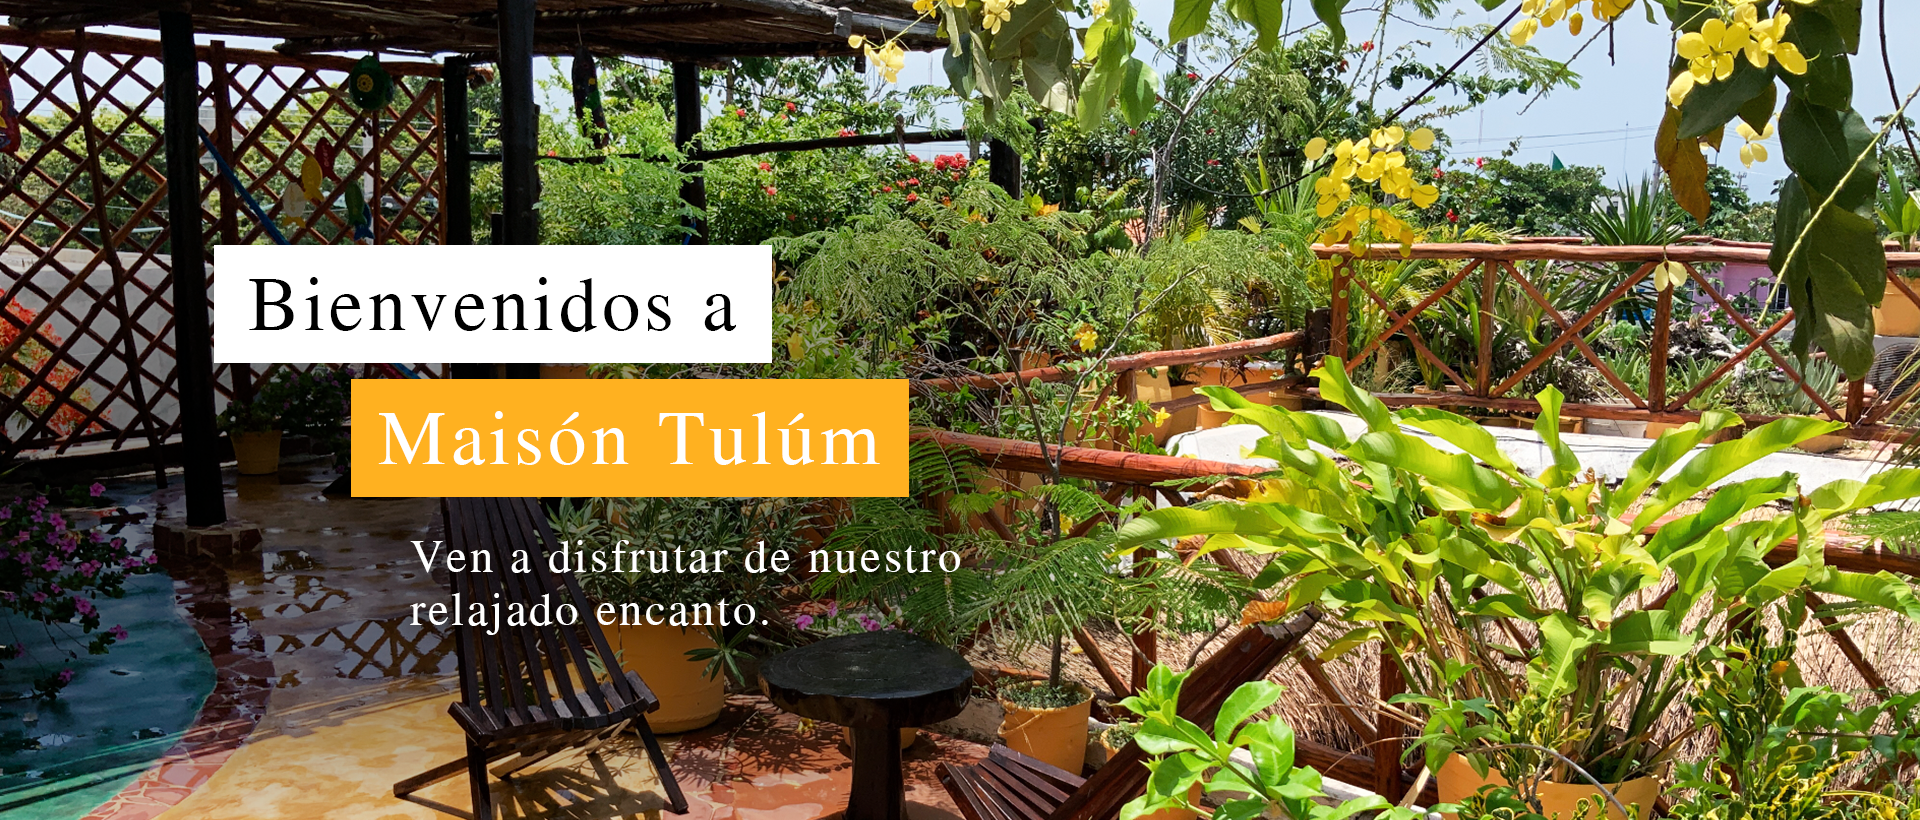 Maison Tulum Hotel